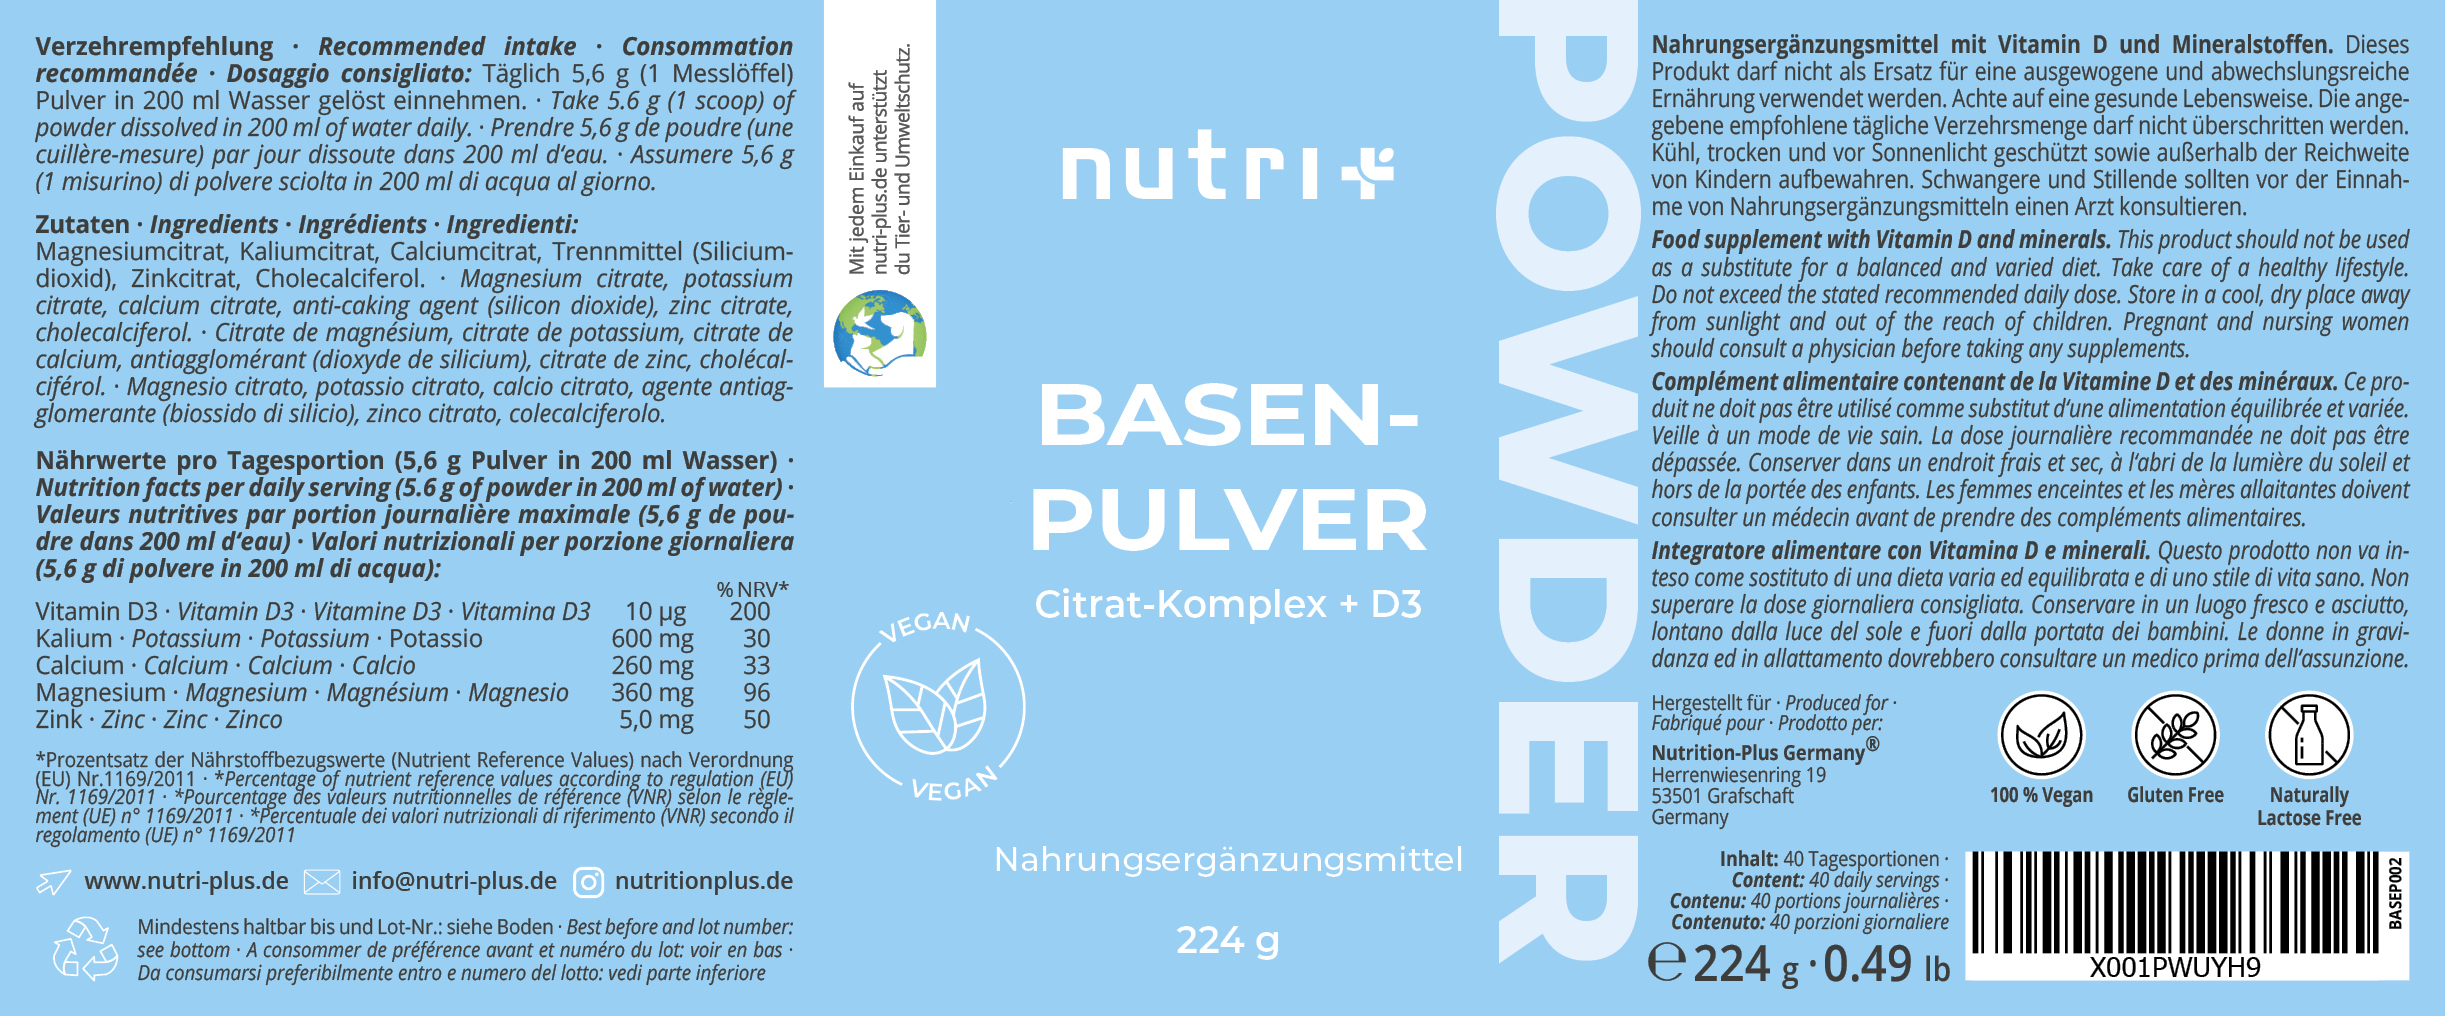 Alkalizing powder - vital substances for acid-base balance